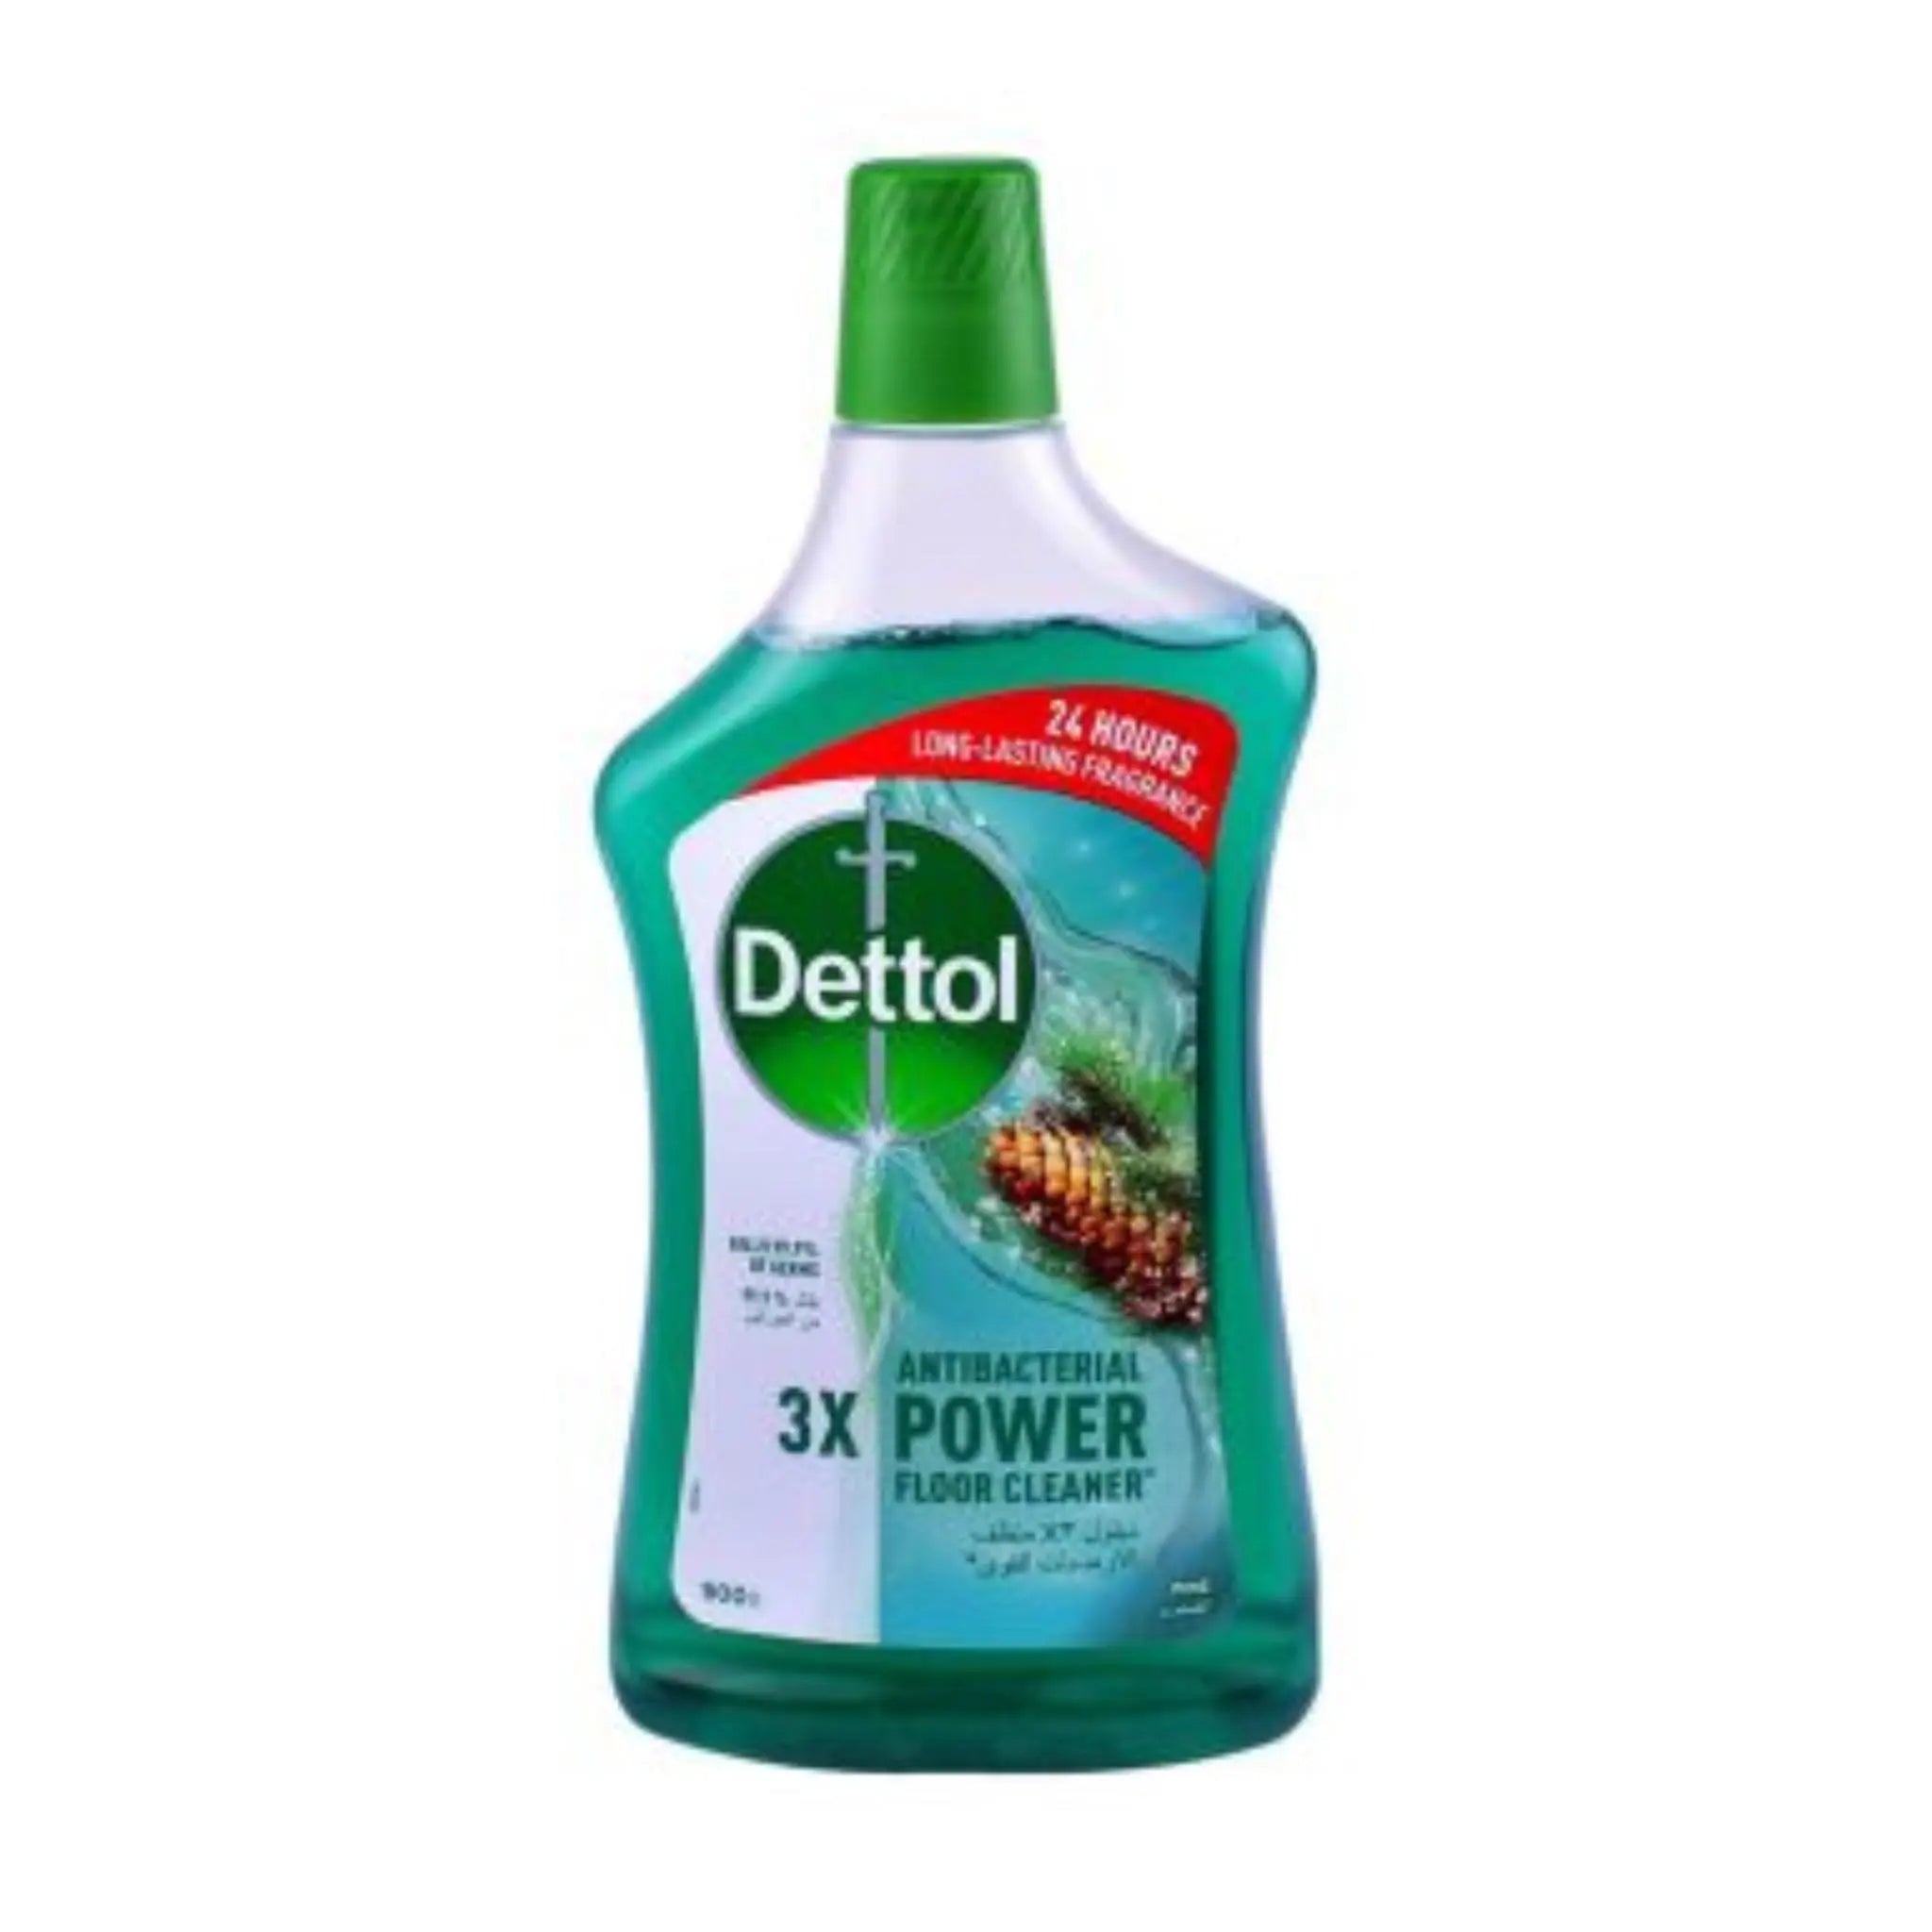 Dettol Anti-Bacterial 3X Power Floor Cleaner Pine 900ml - 2x6 sets (1 carton) Marino.AE